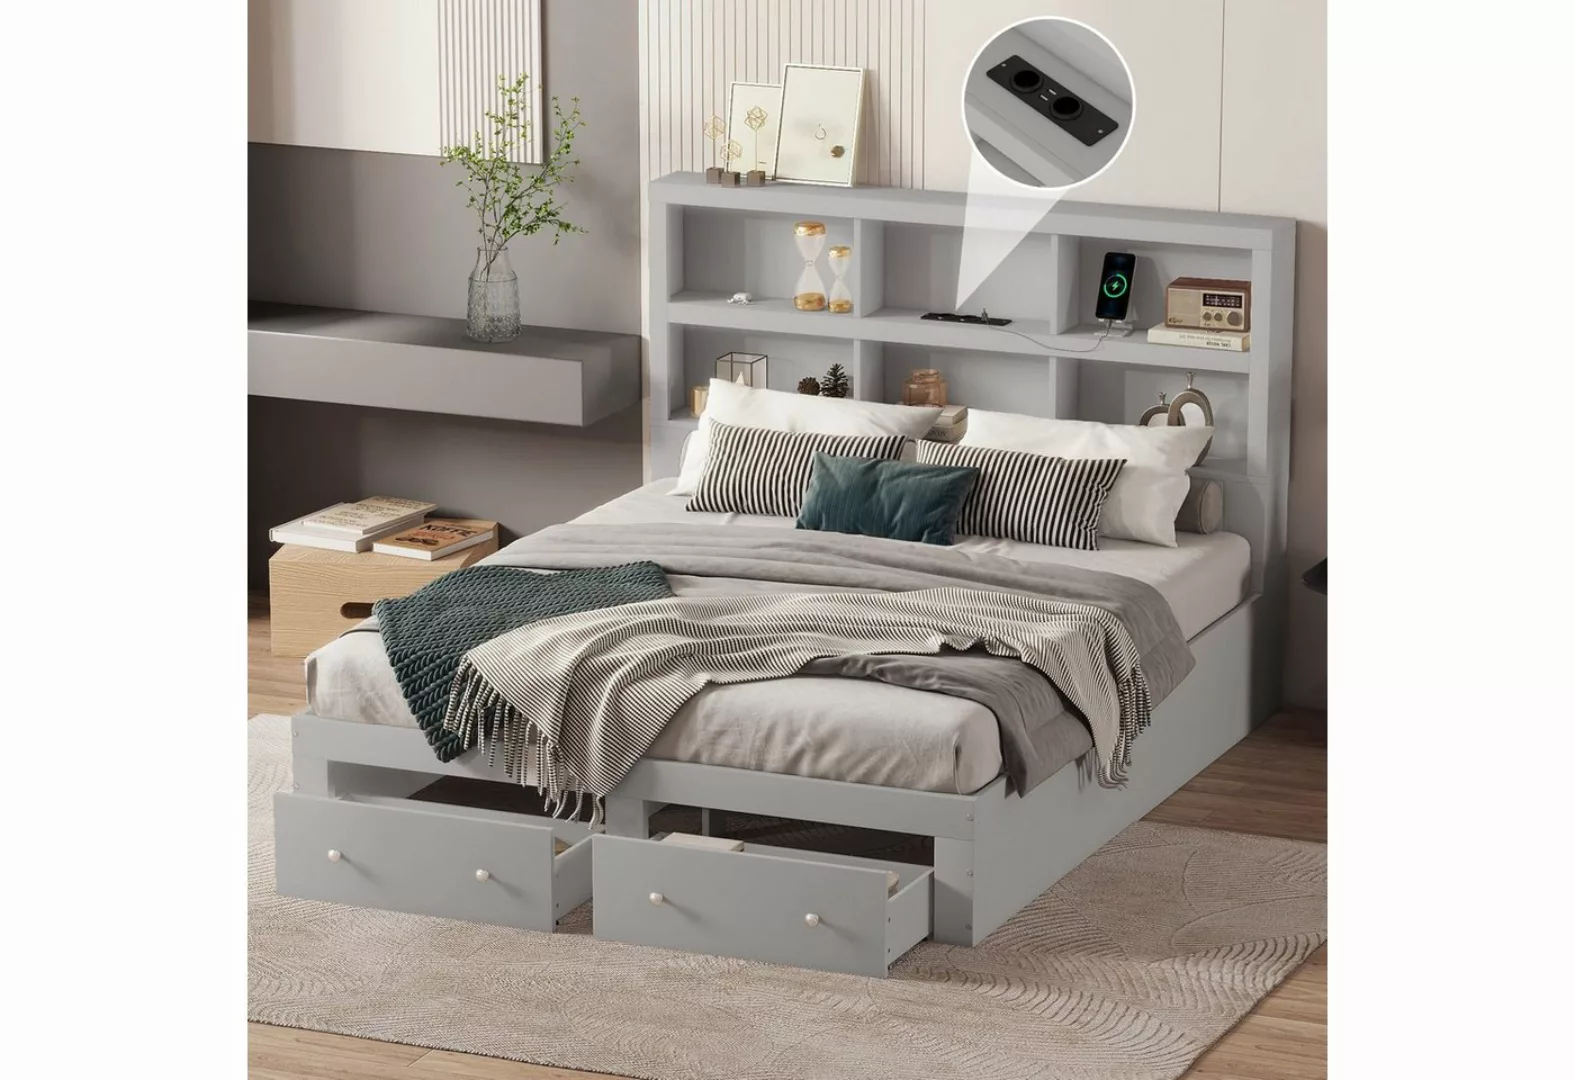 WISHDOR Bett 160*200cm Doppelbett Holzbett Lagerungsbett Funktionsbett (mit günstig online kaufen